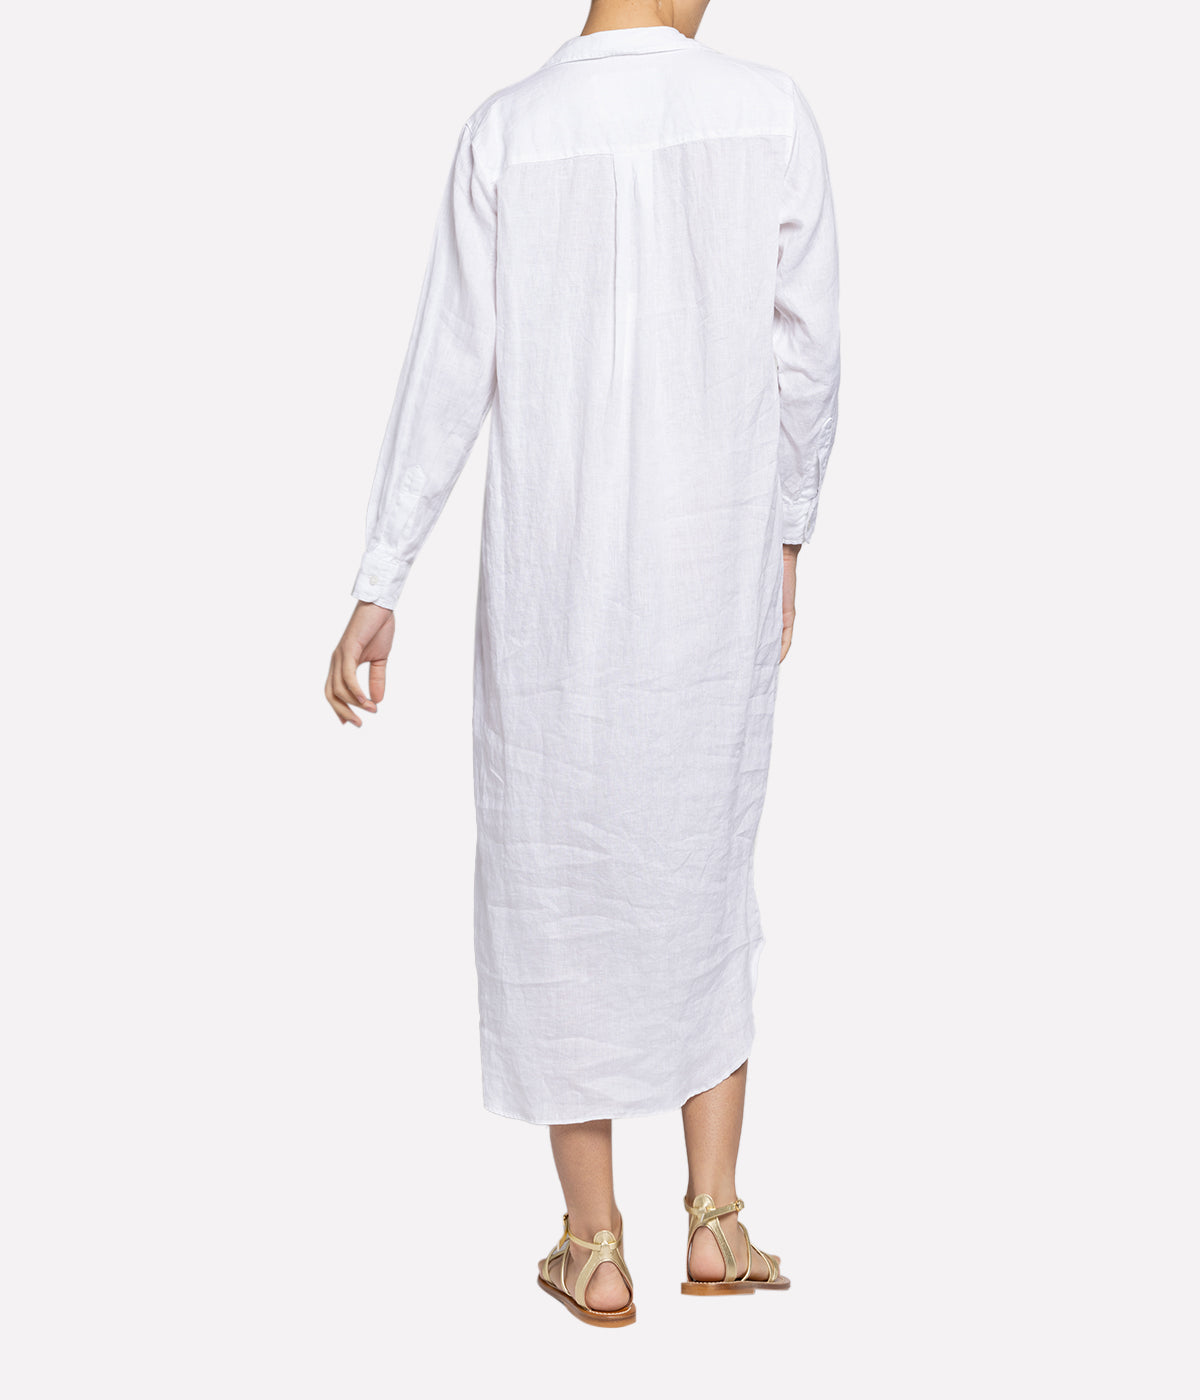 Rory Woven Linen Dress in White